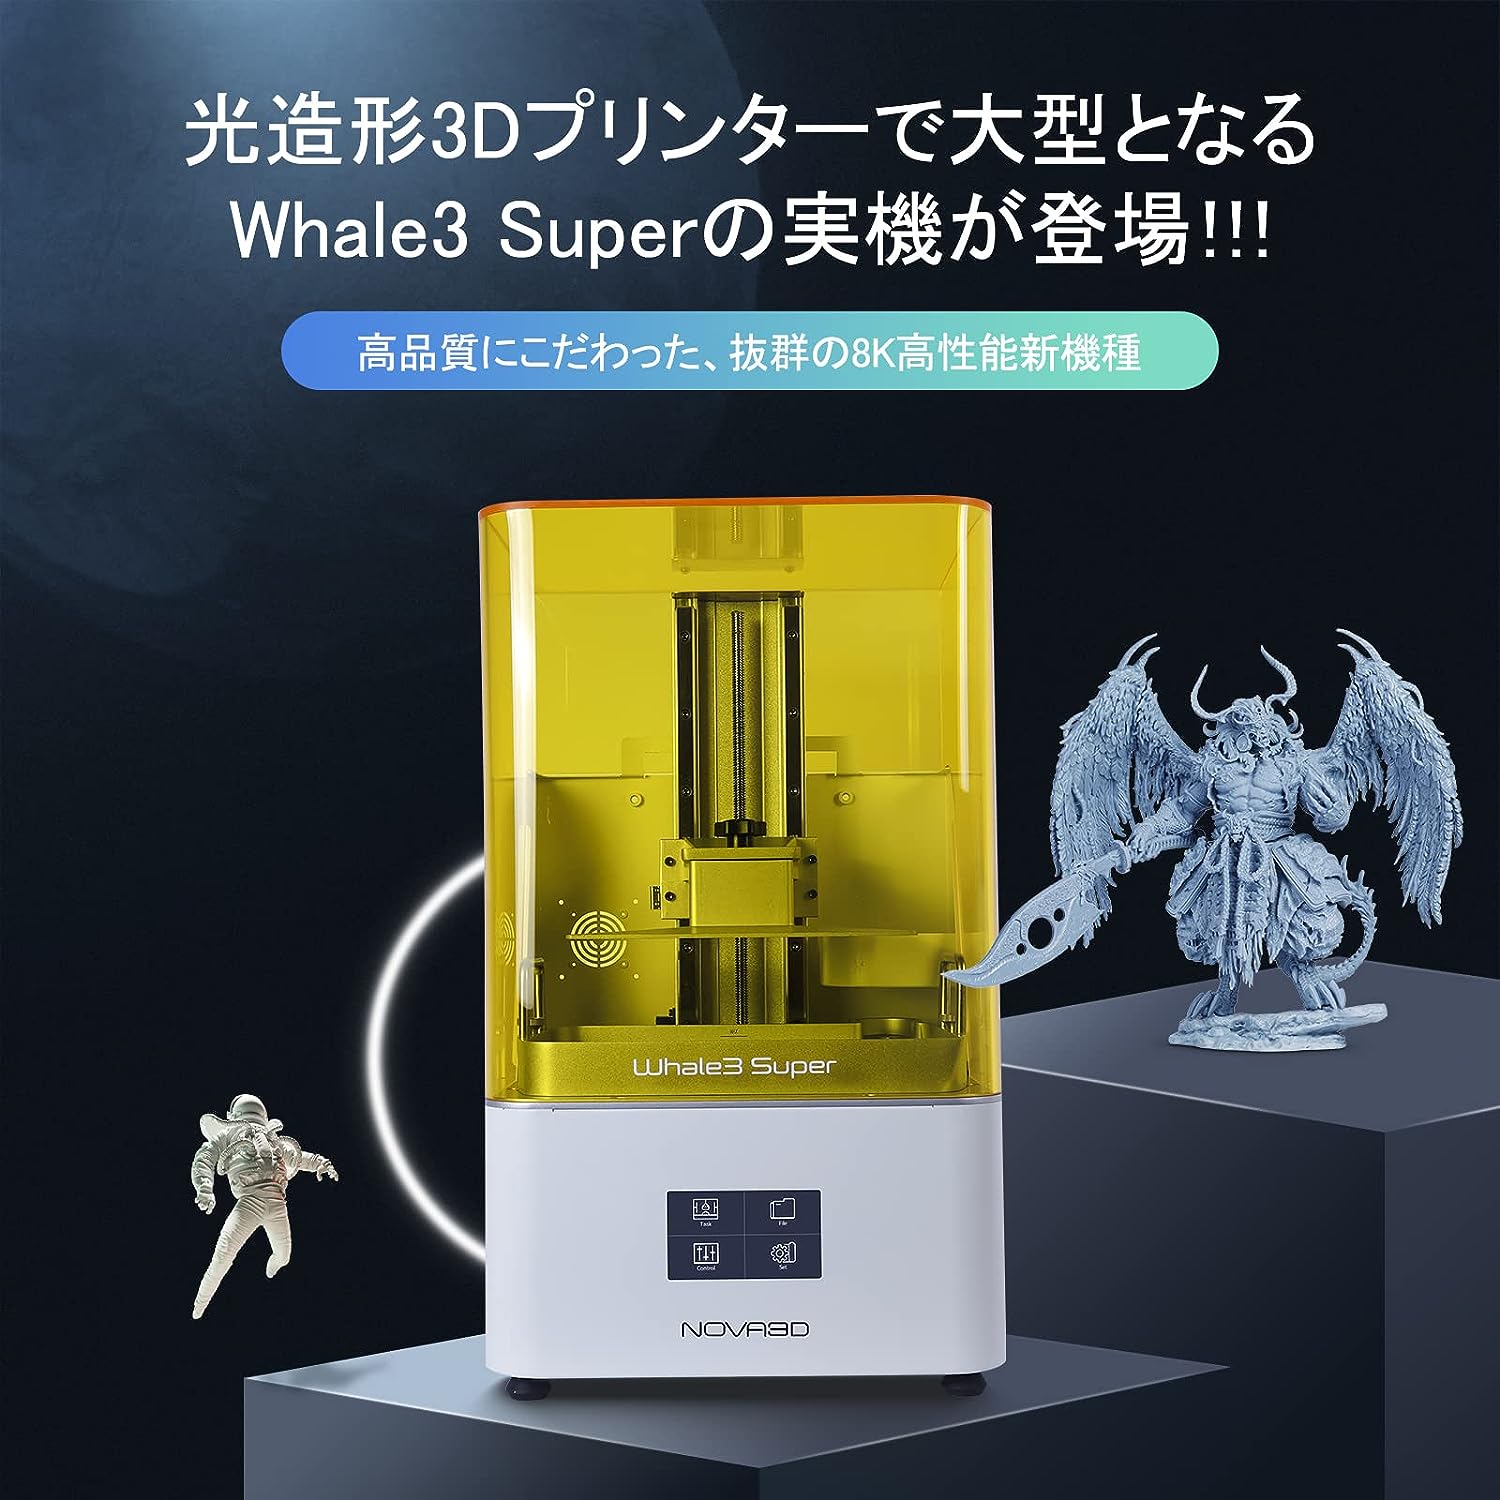 NOVA3D Whale3 Super 3Dプリンター 光造形 超大印刷サイズ228*128 